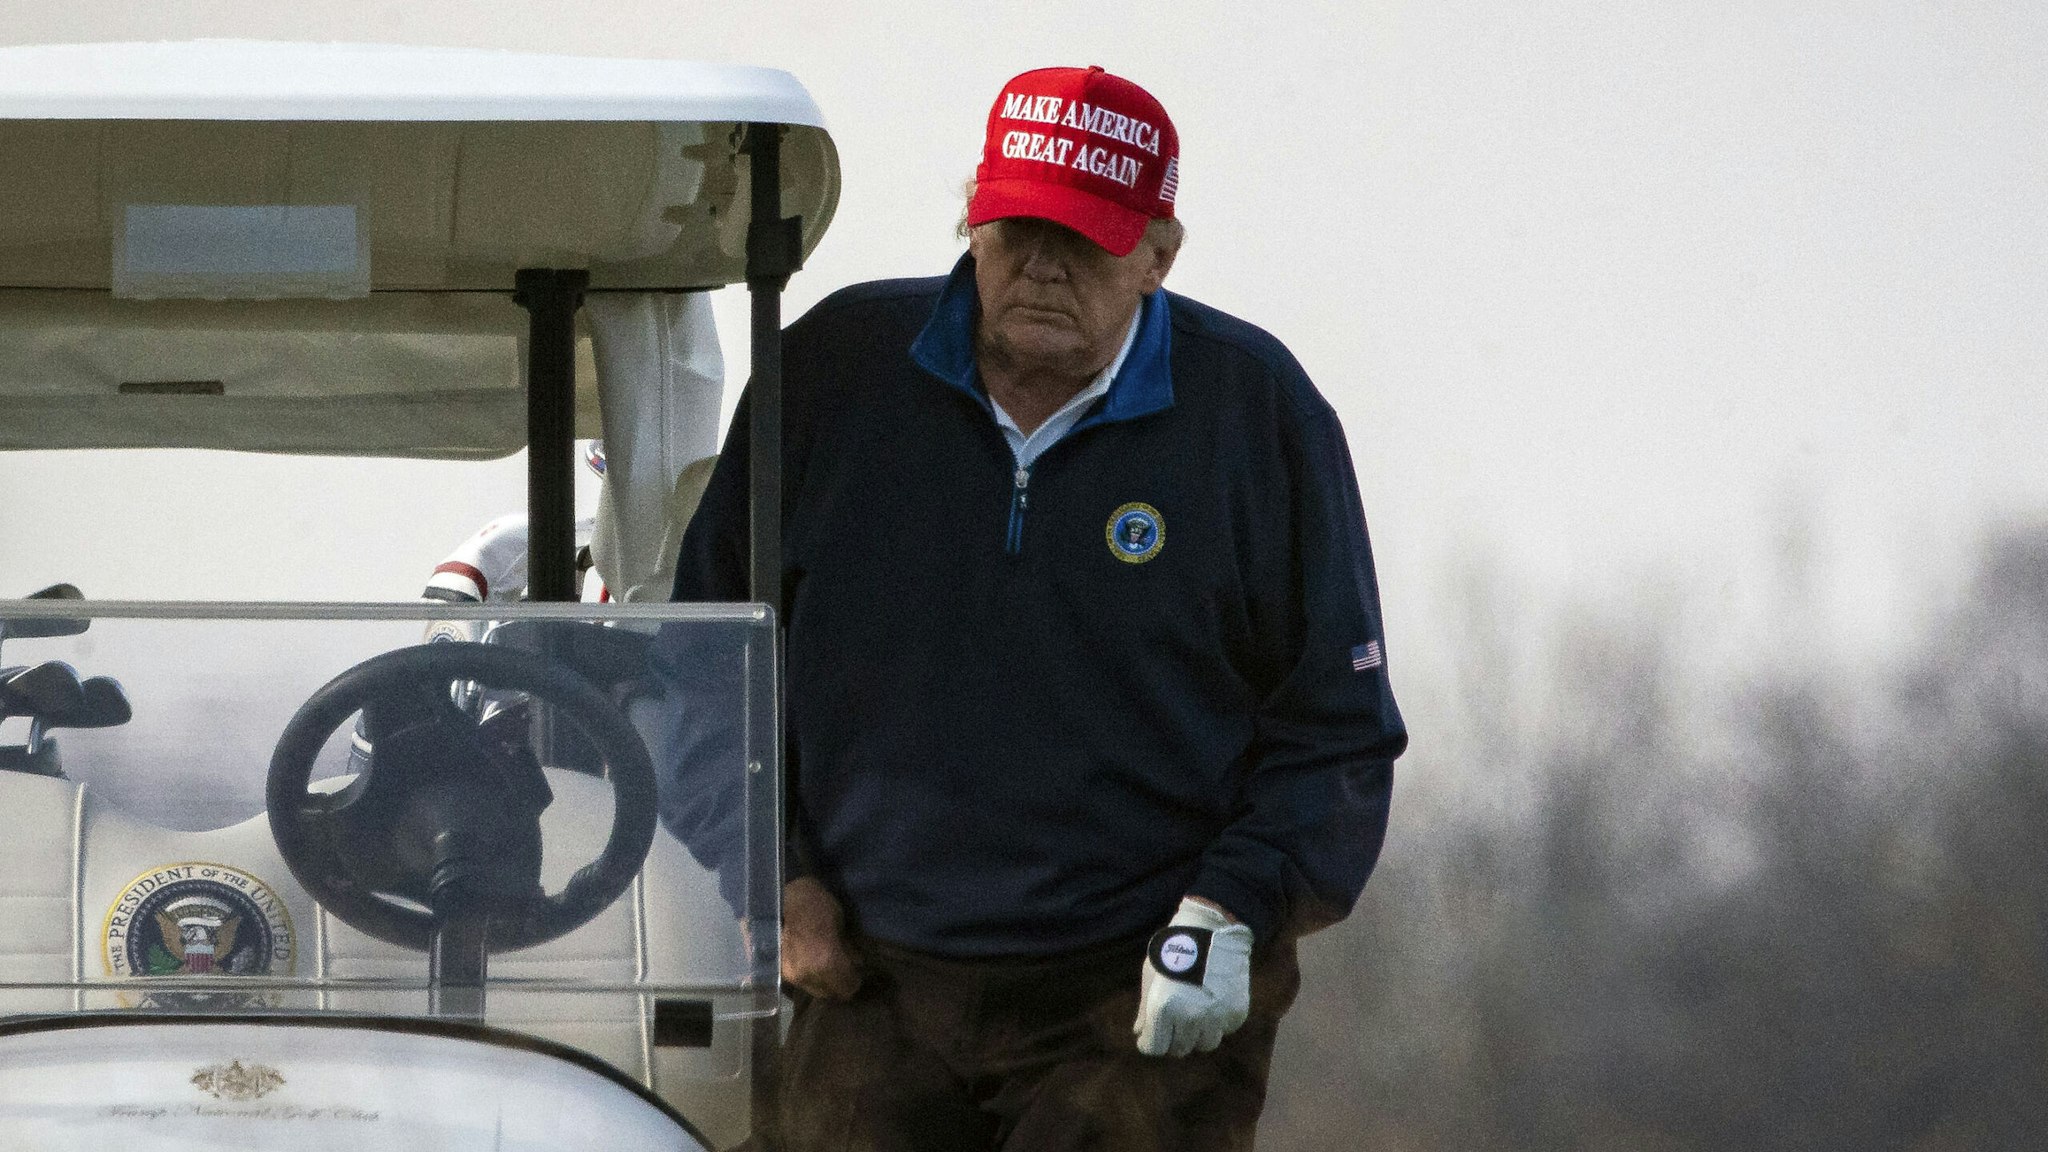 STERLING, VA - DECEMBER 13: U.S. President Donald Trump climbs into golf cart number 45 as he golfs at Trump National Golf Club on December 13, 2020 in Sterling, Virginia.